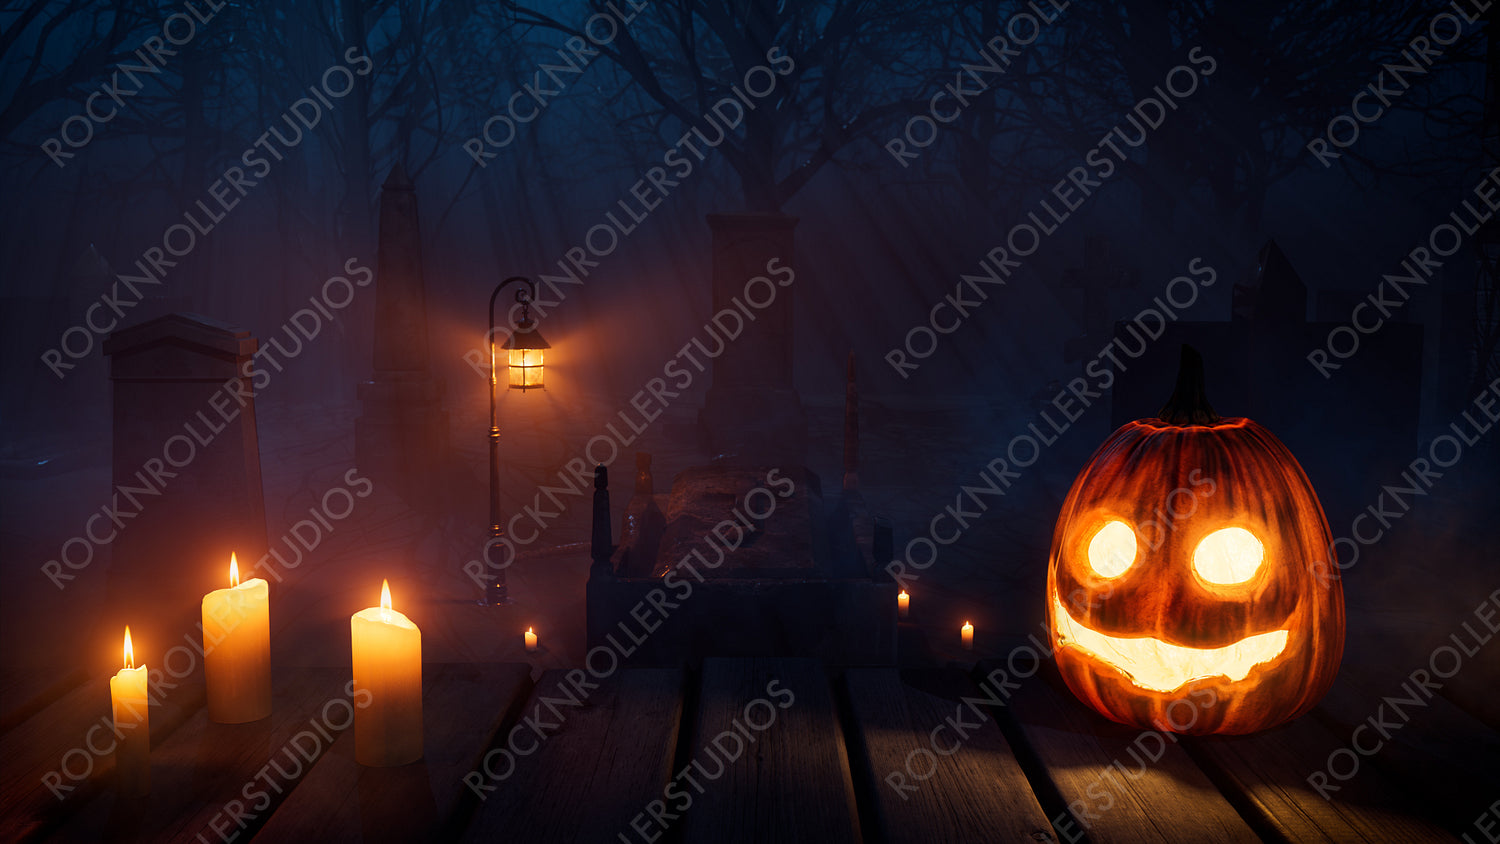 Halloween Illustration with Spooky Candlelit Gravestones and Jack O' Lantern.